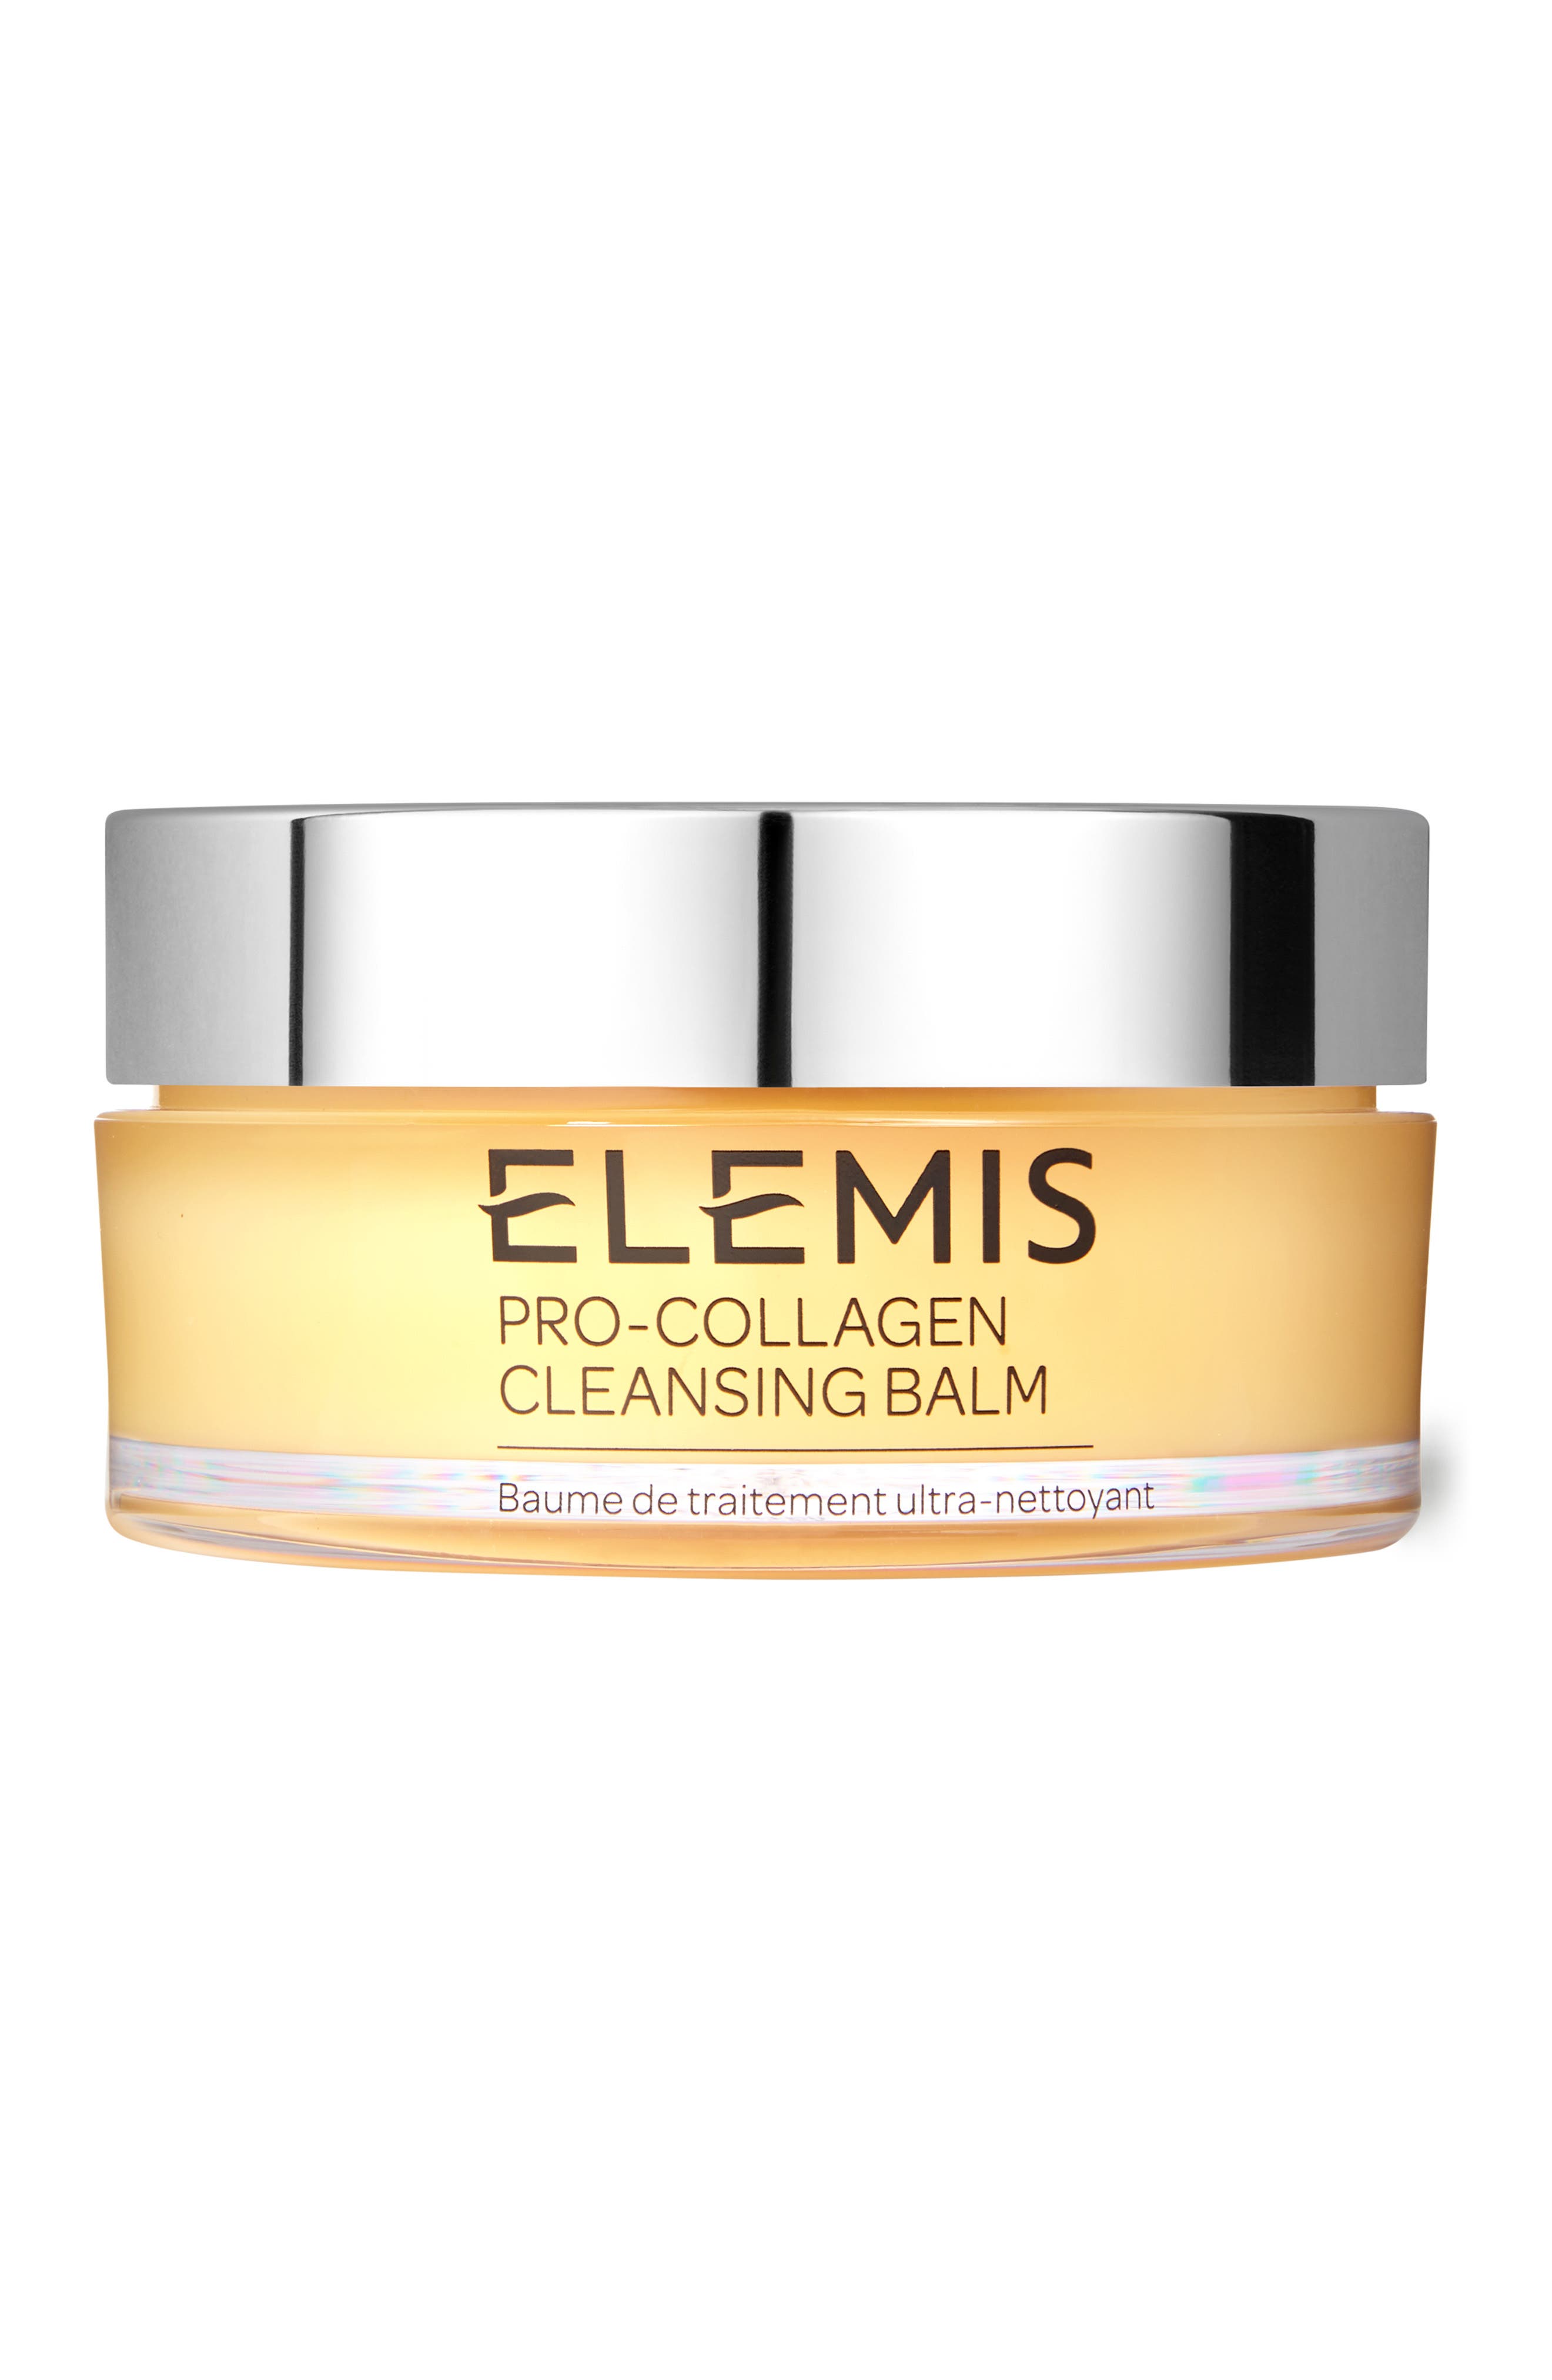 ELEMIS PRO-COLLAGEN CLEANSING BALM,641628008100